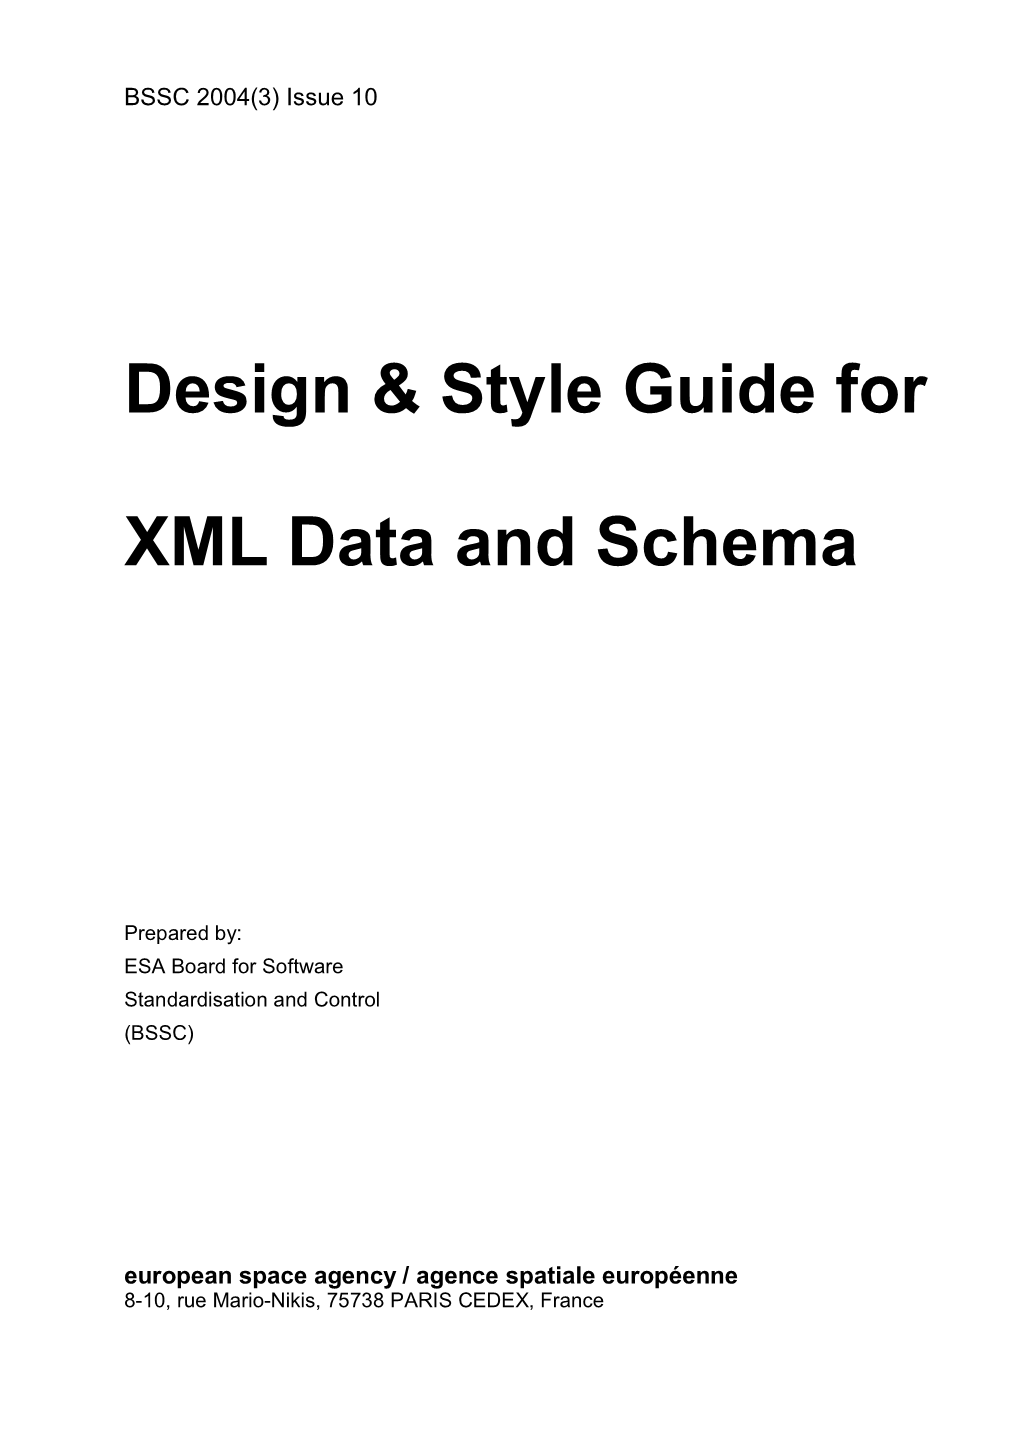 Design & Style Guide for XML Data and Schema